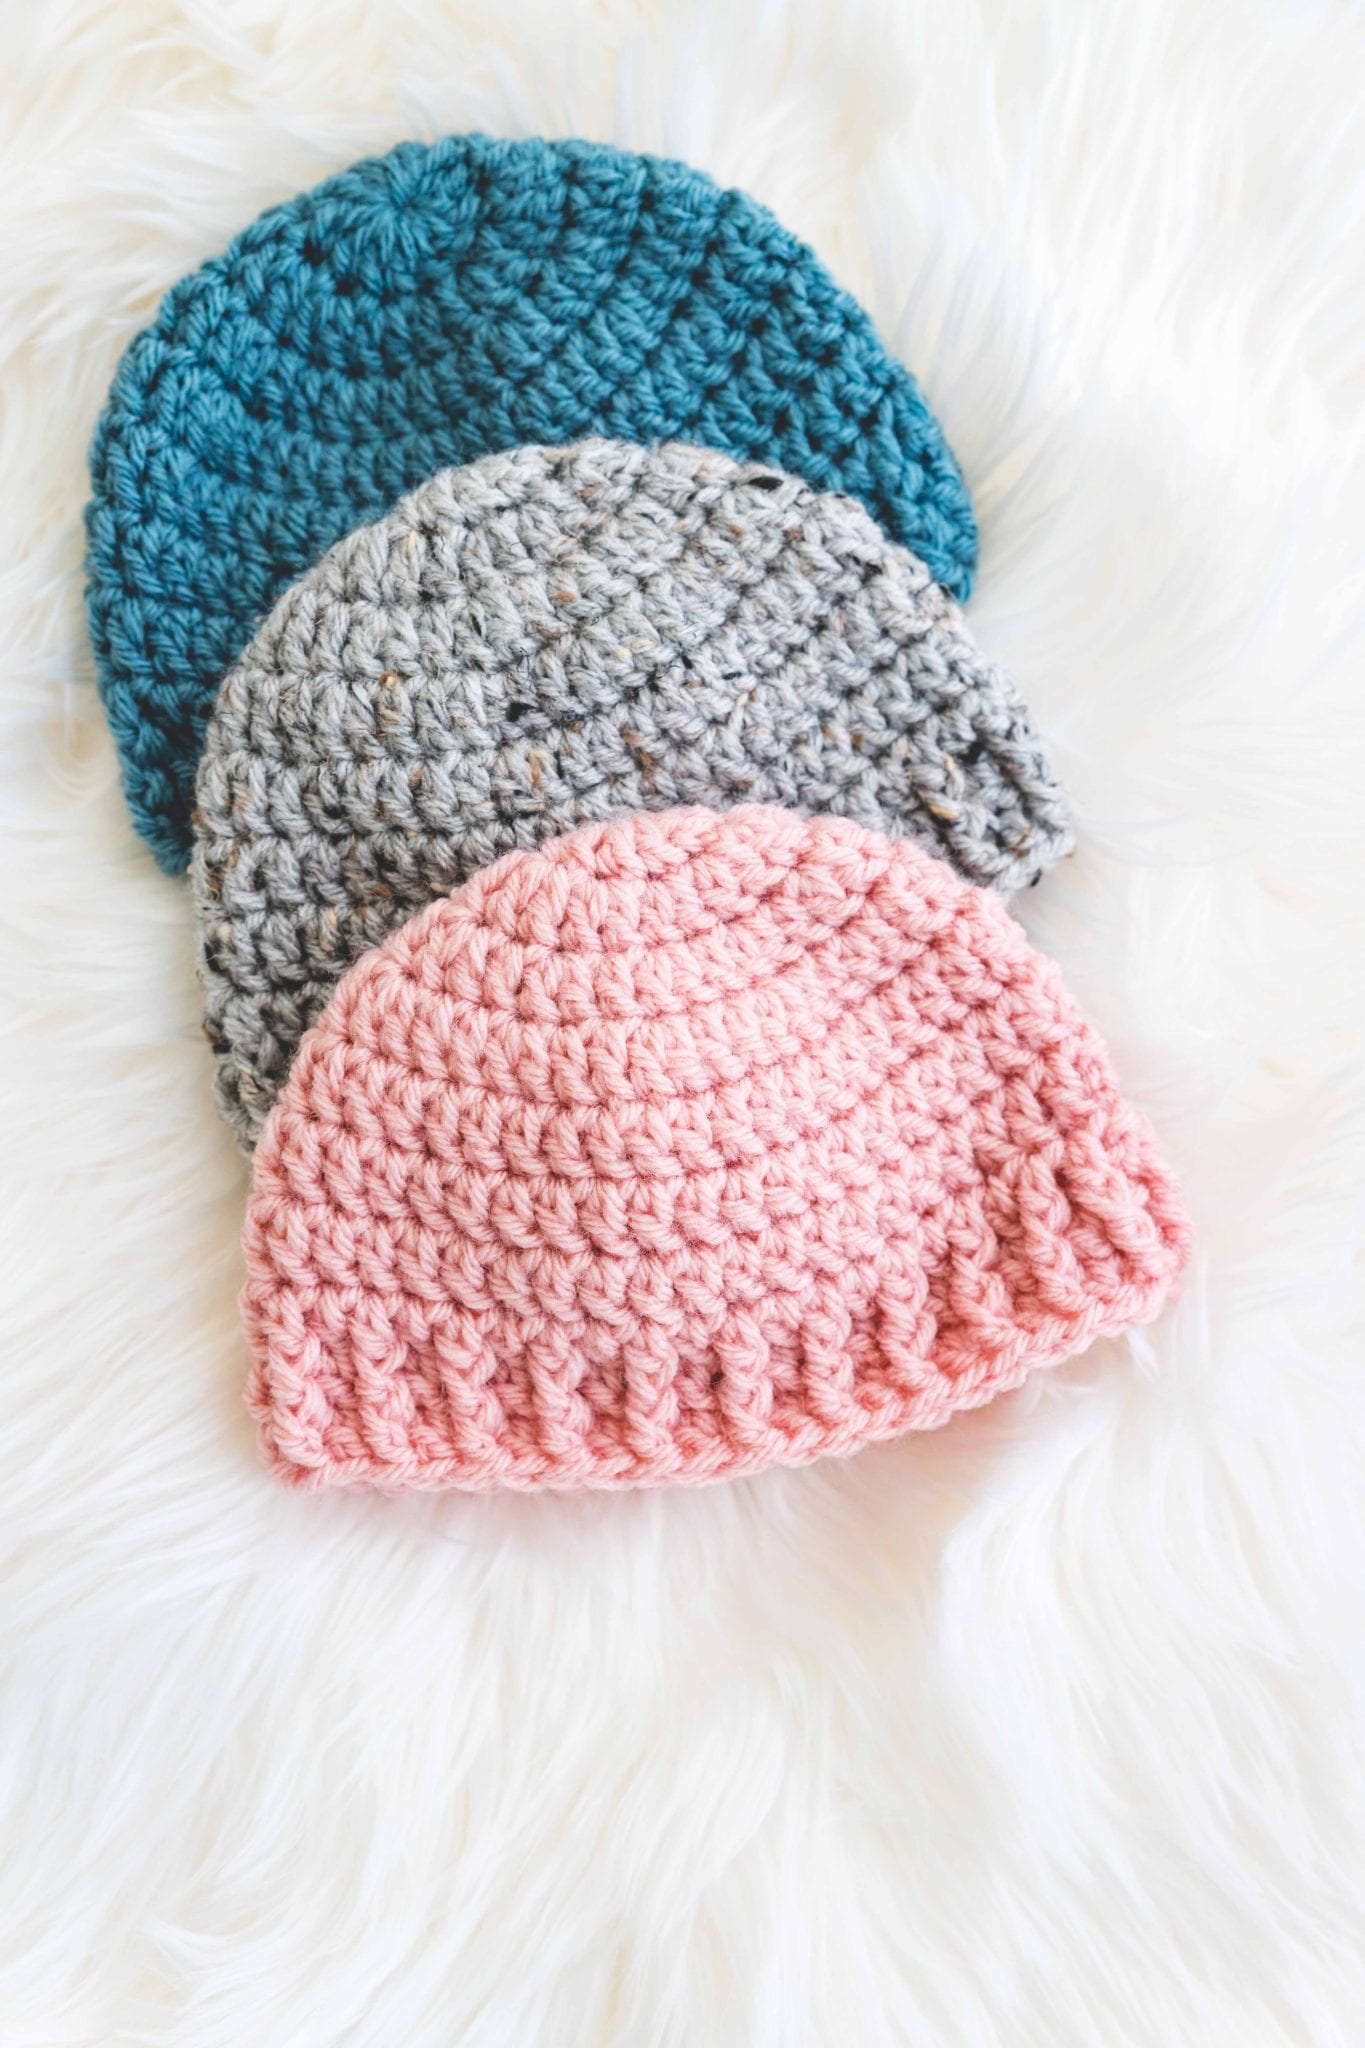 Crochet Baby Hat - free pattern & video for beginners